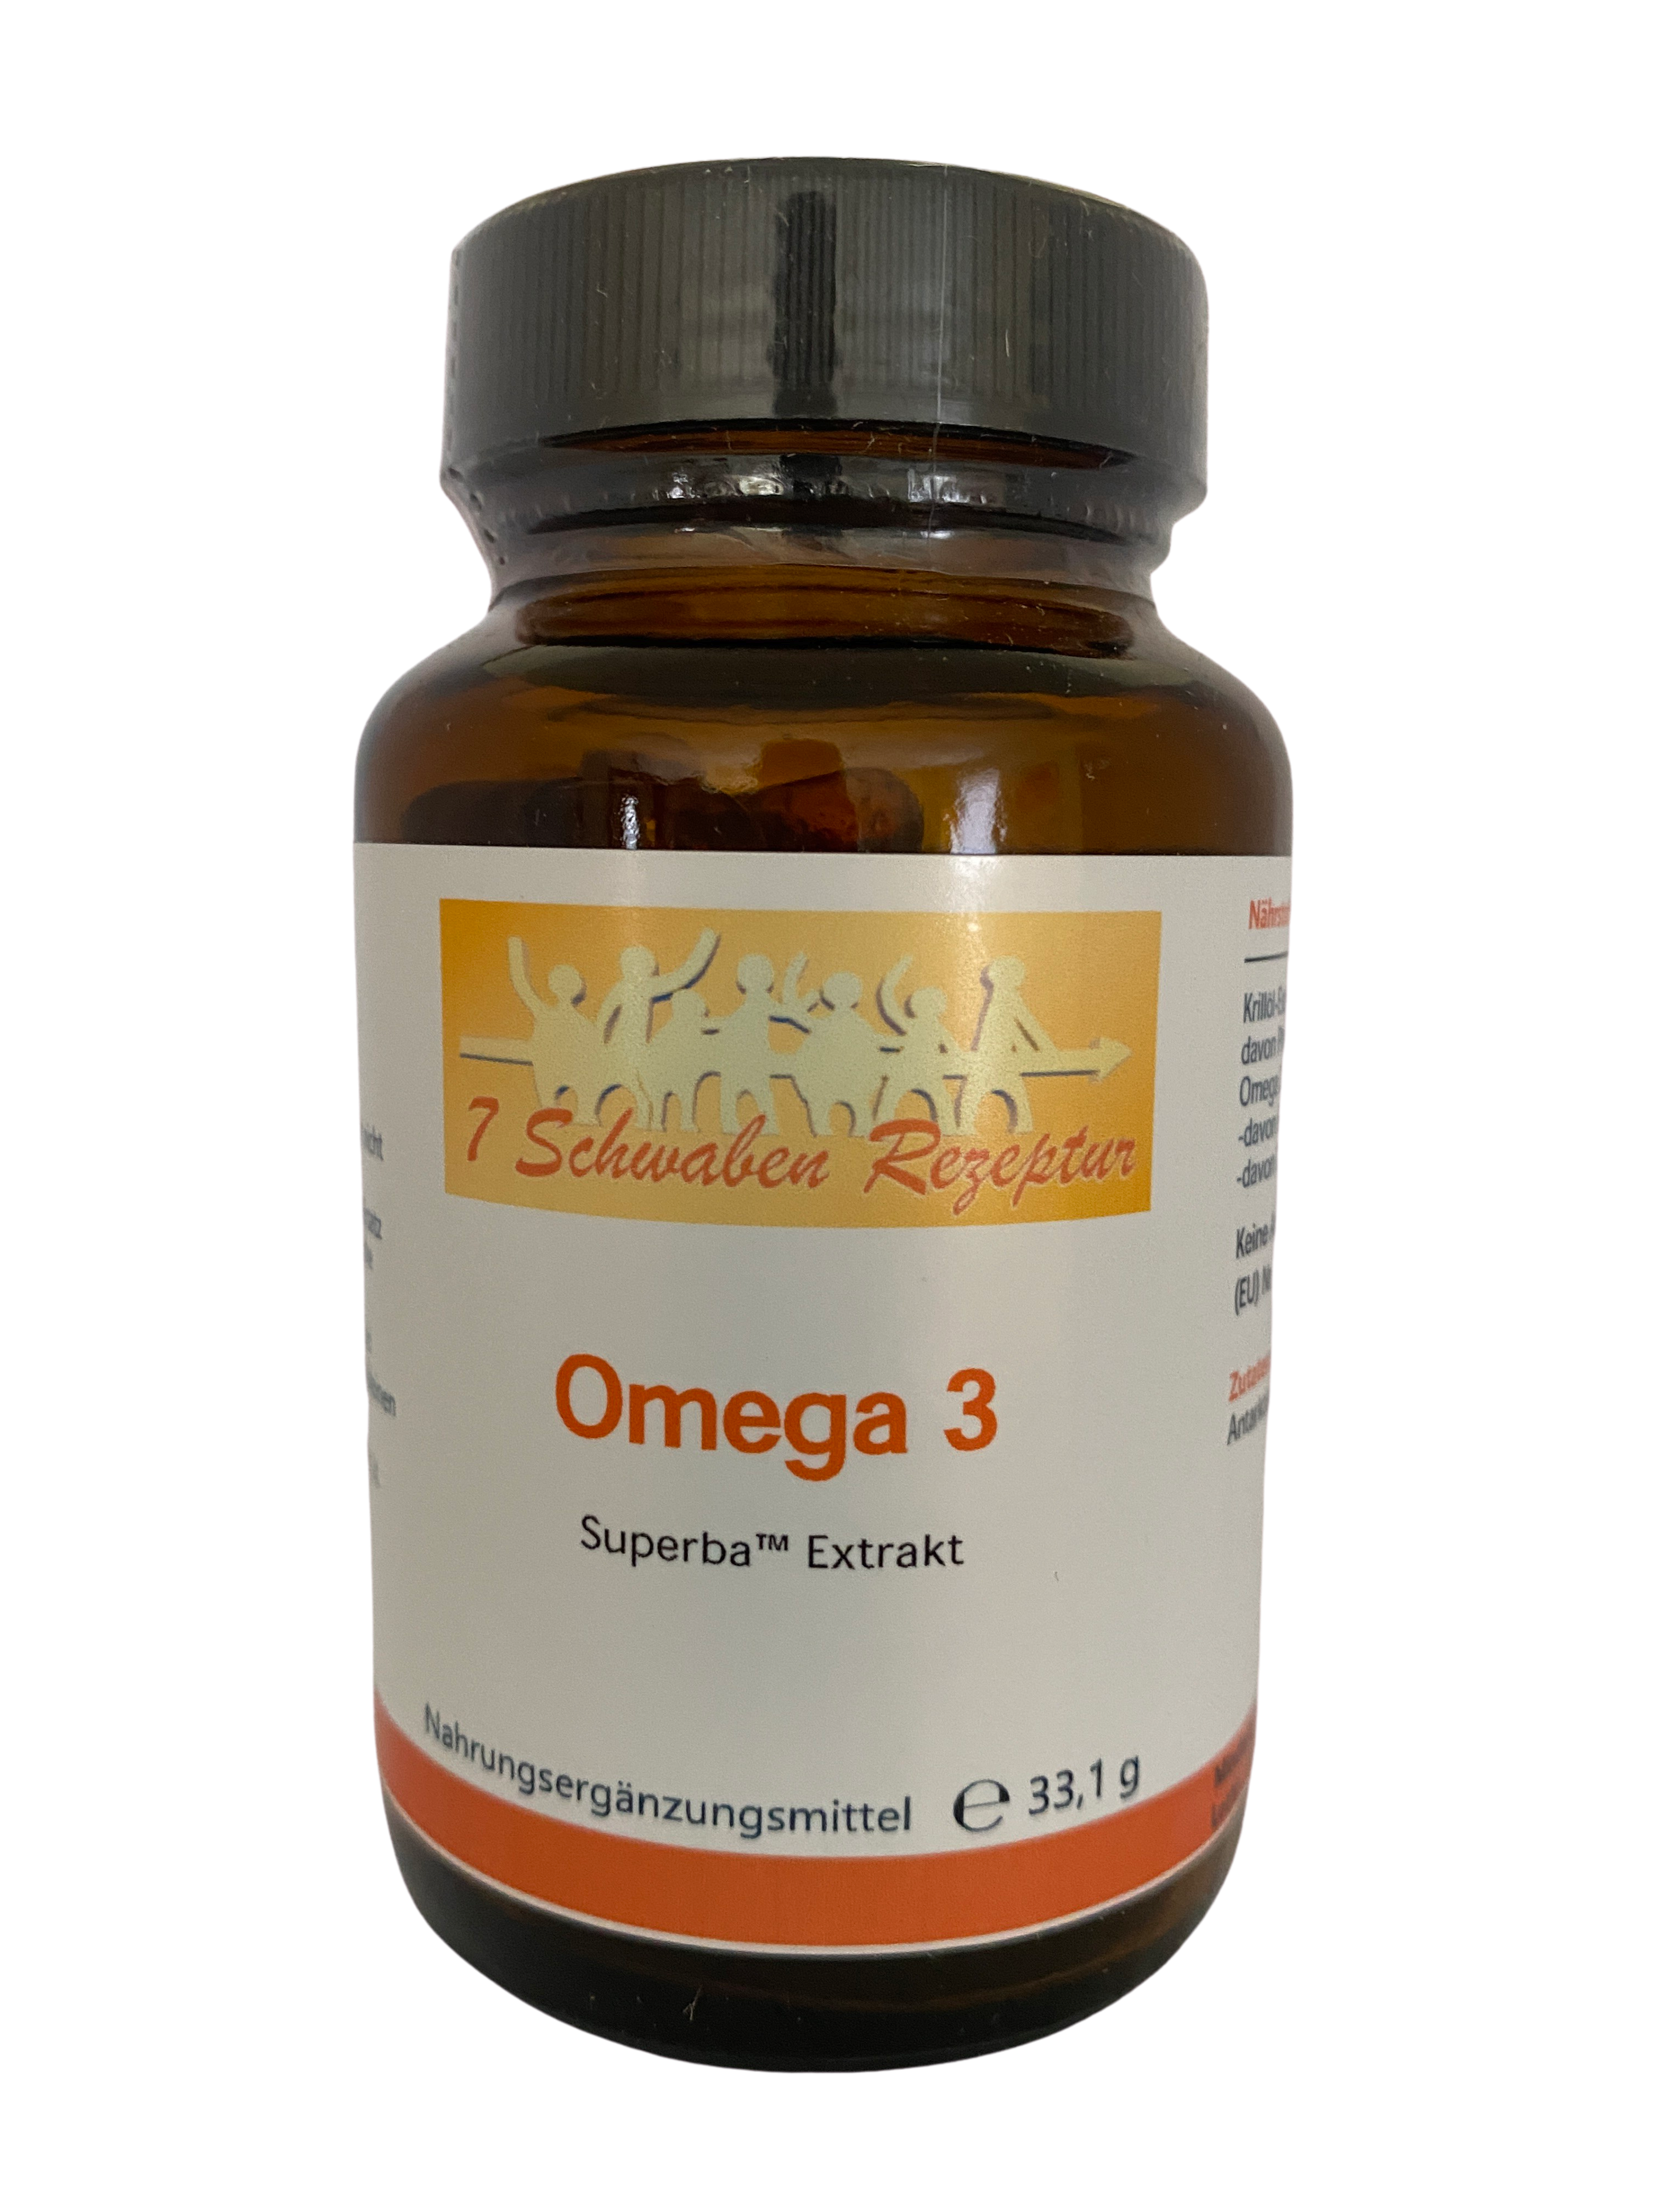 Omega 3 Superba TM Extract